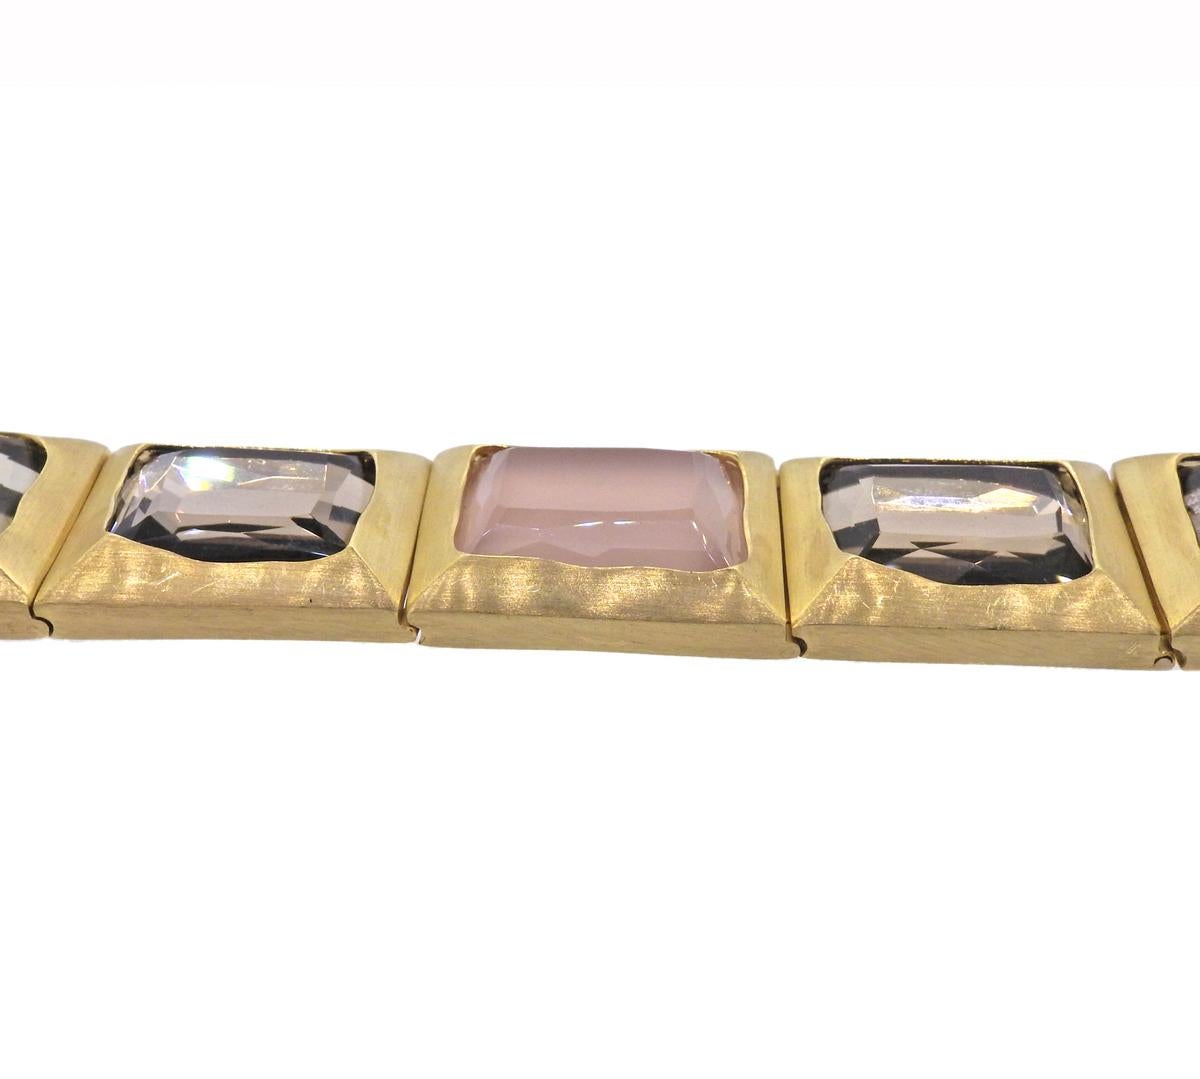 Impressive 18k gold bracelet by H. Stern, set with smokey and rose quartz, adorned with diamond set lizard charm. Diamonds - approx. 0.36ctw, Quartz. Bracelet measures 7